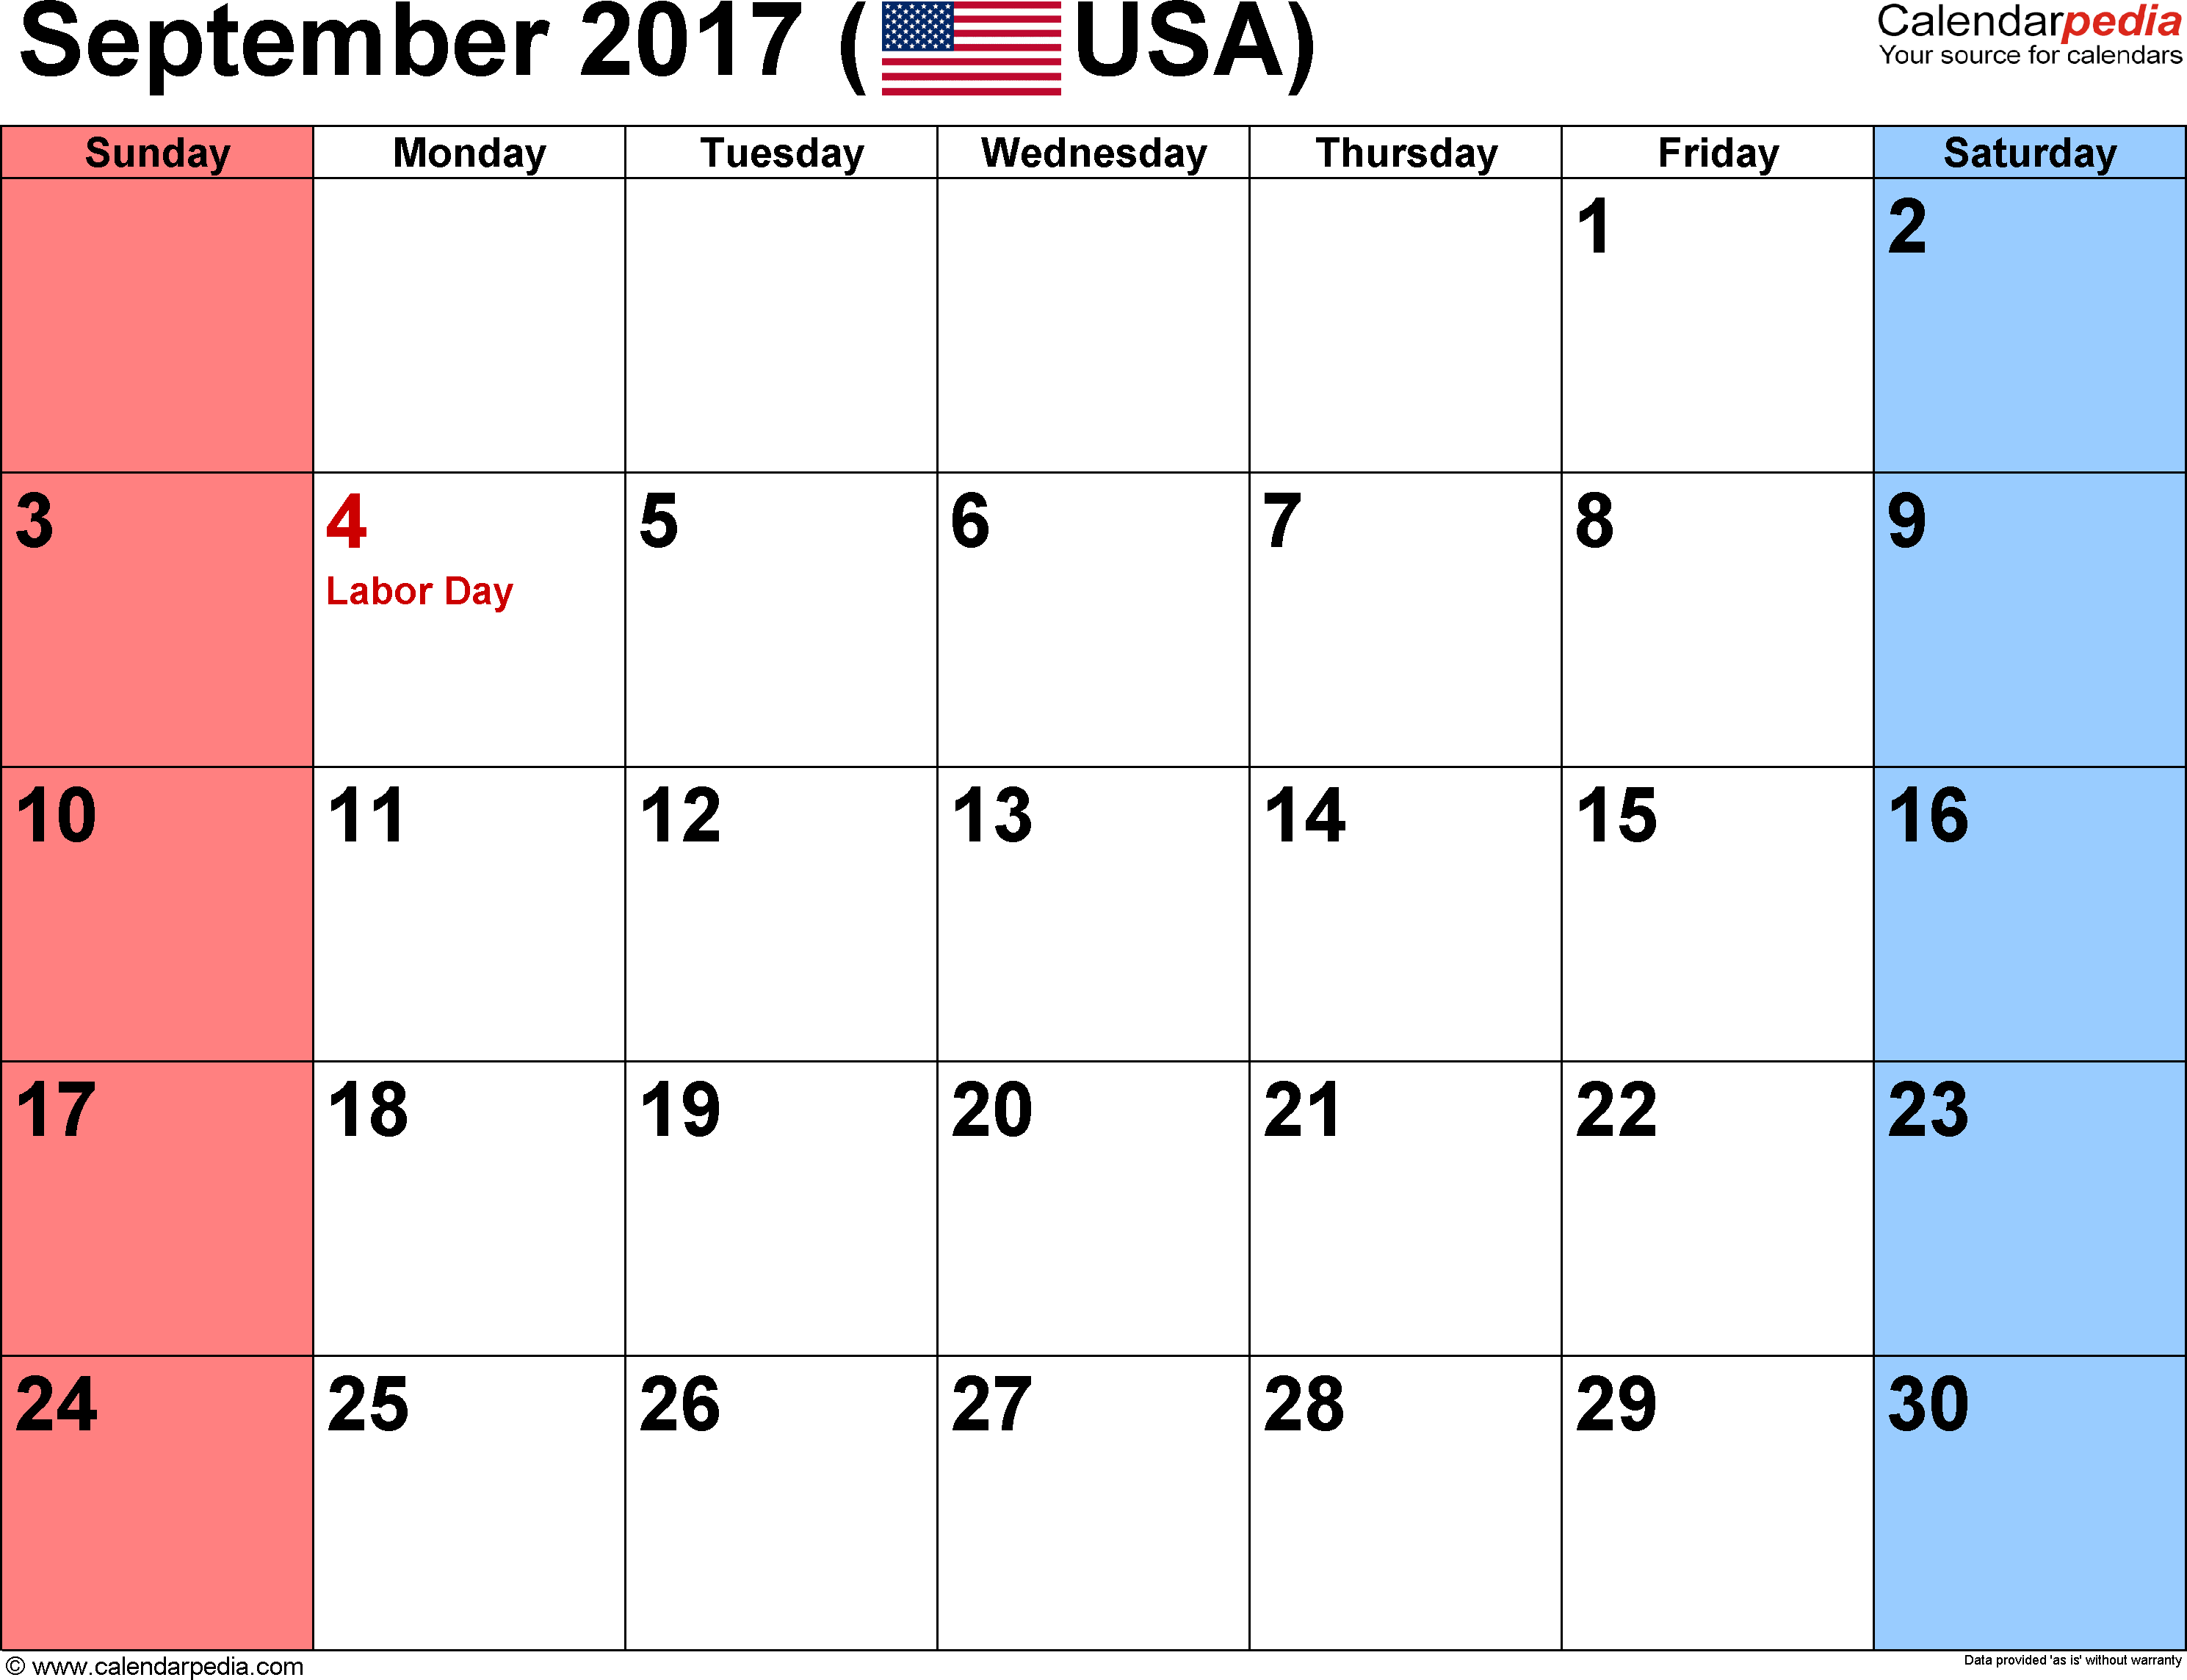 September 2016 Calendar Downl